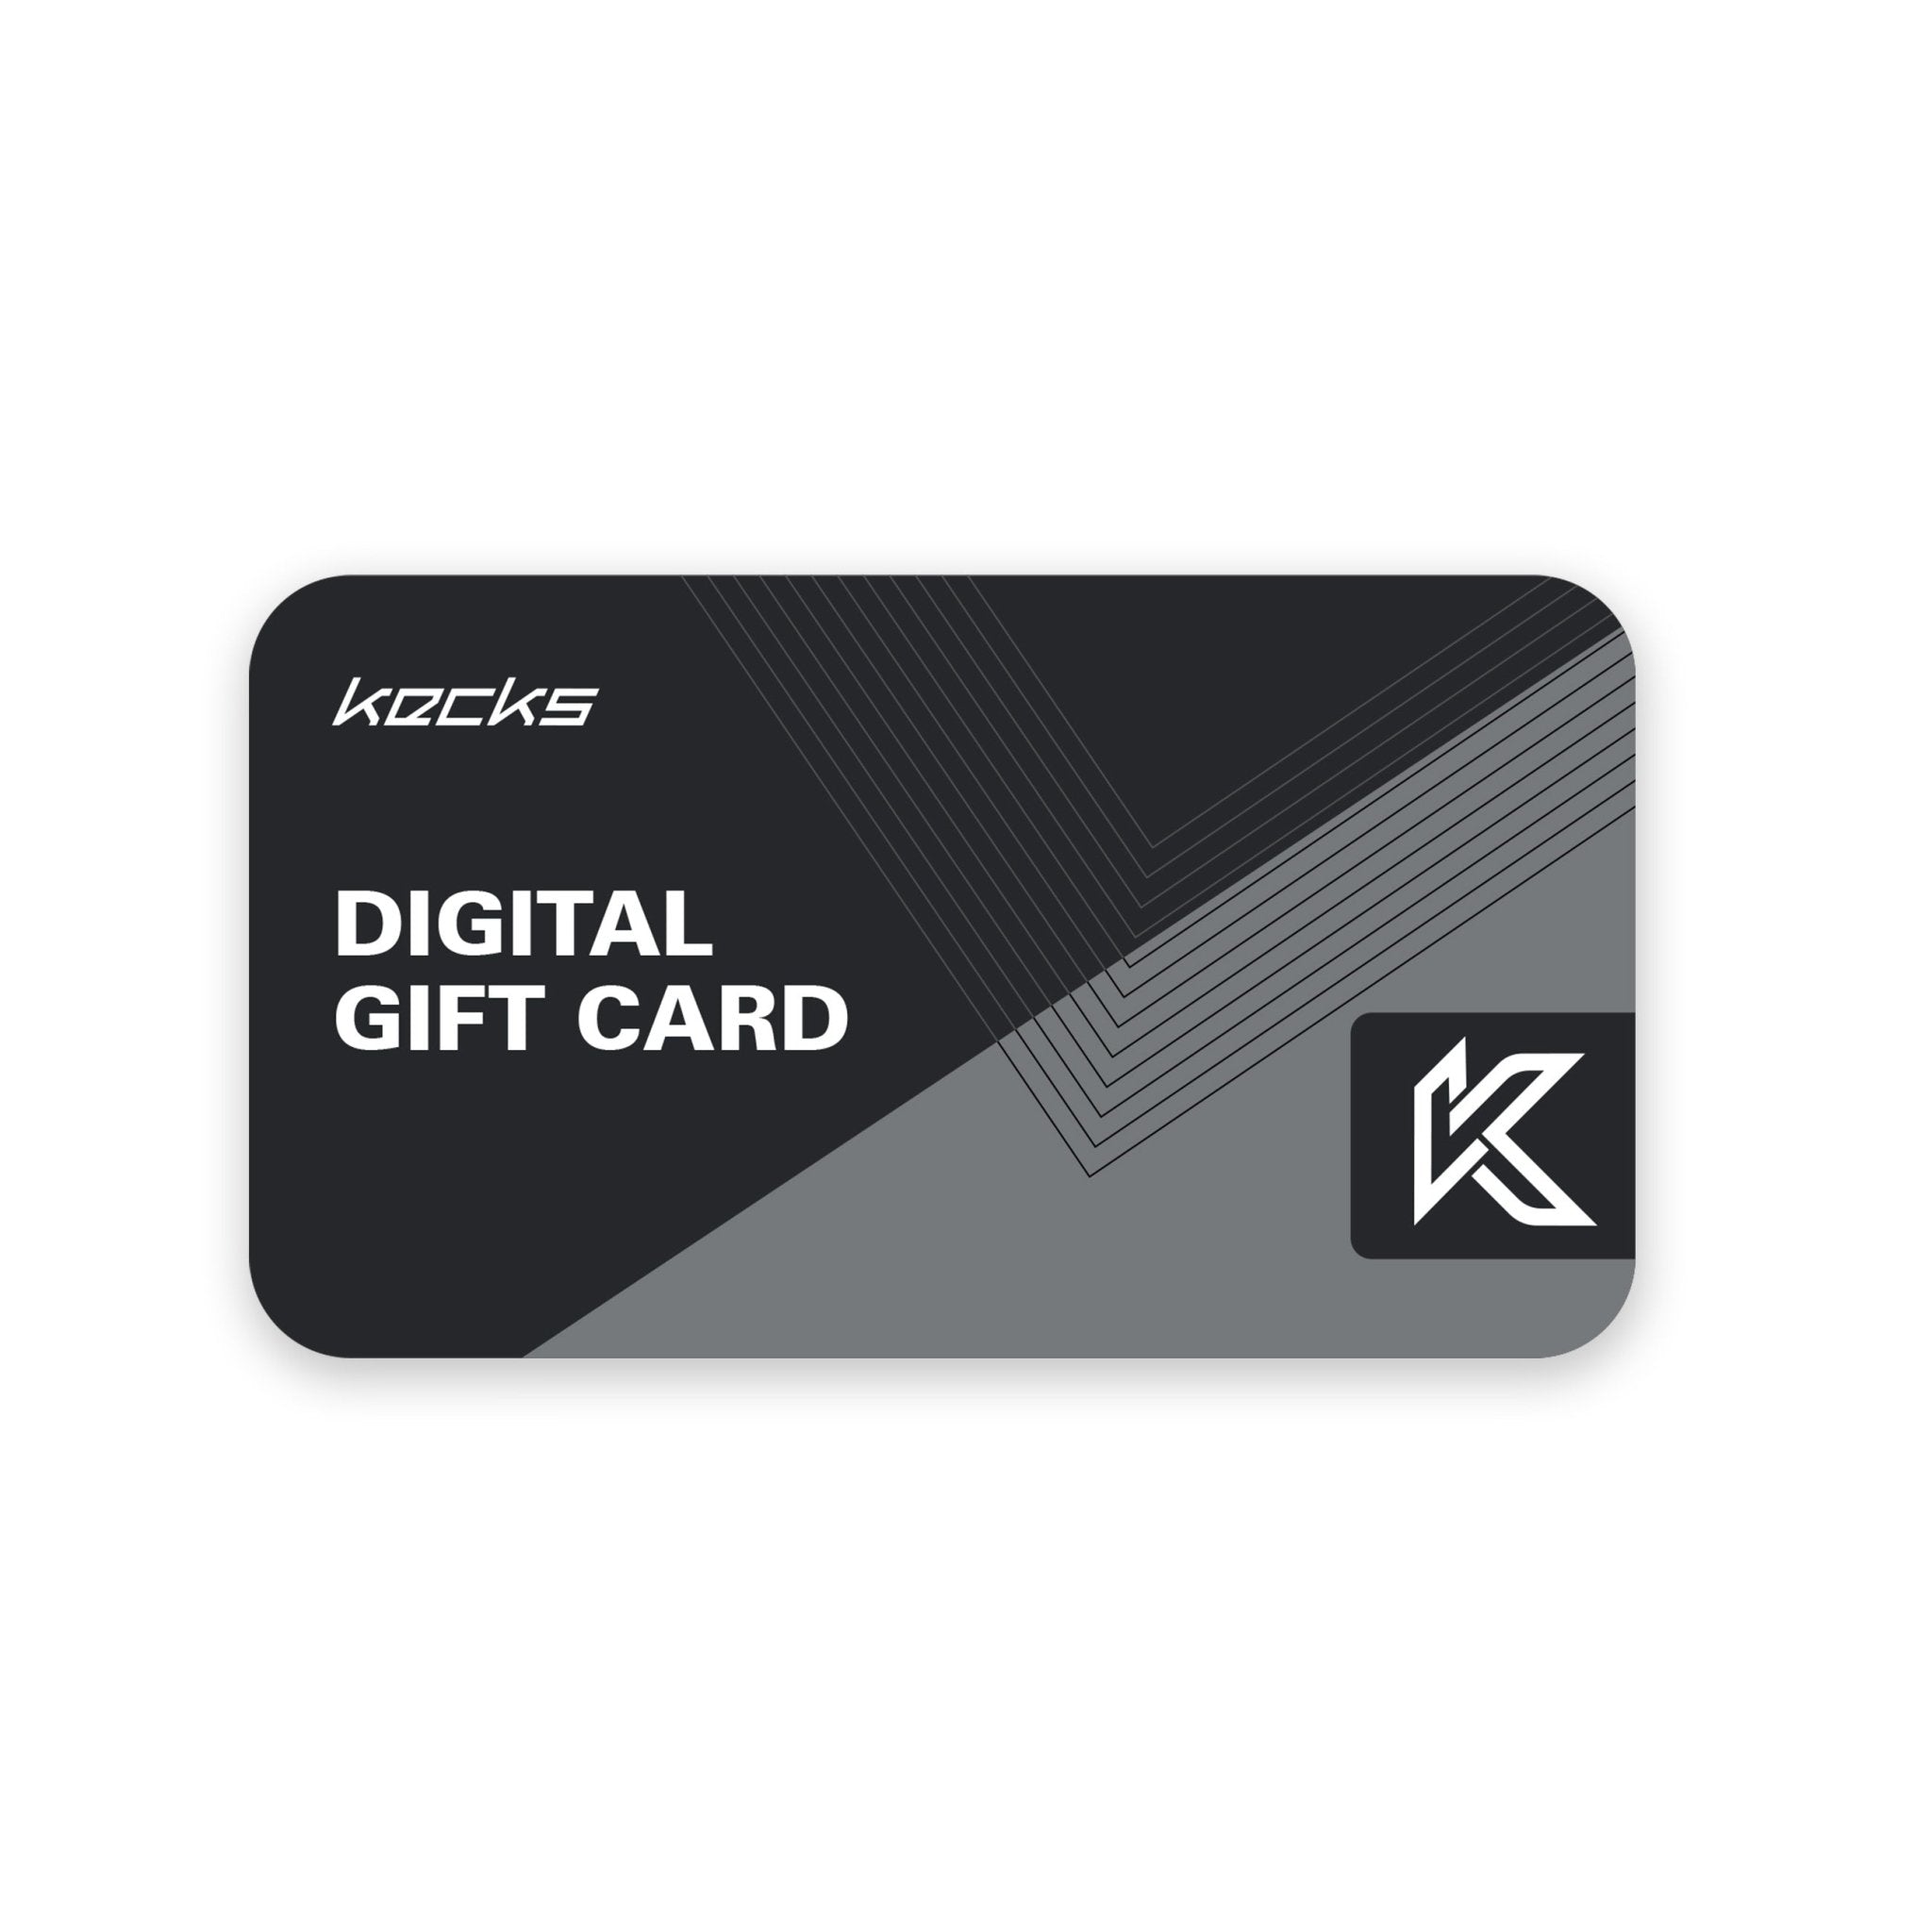 Digital Gift Card - Kecks